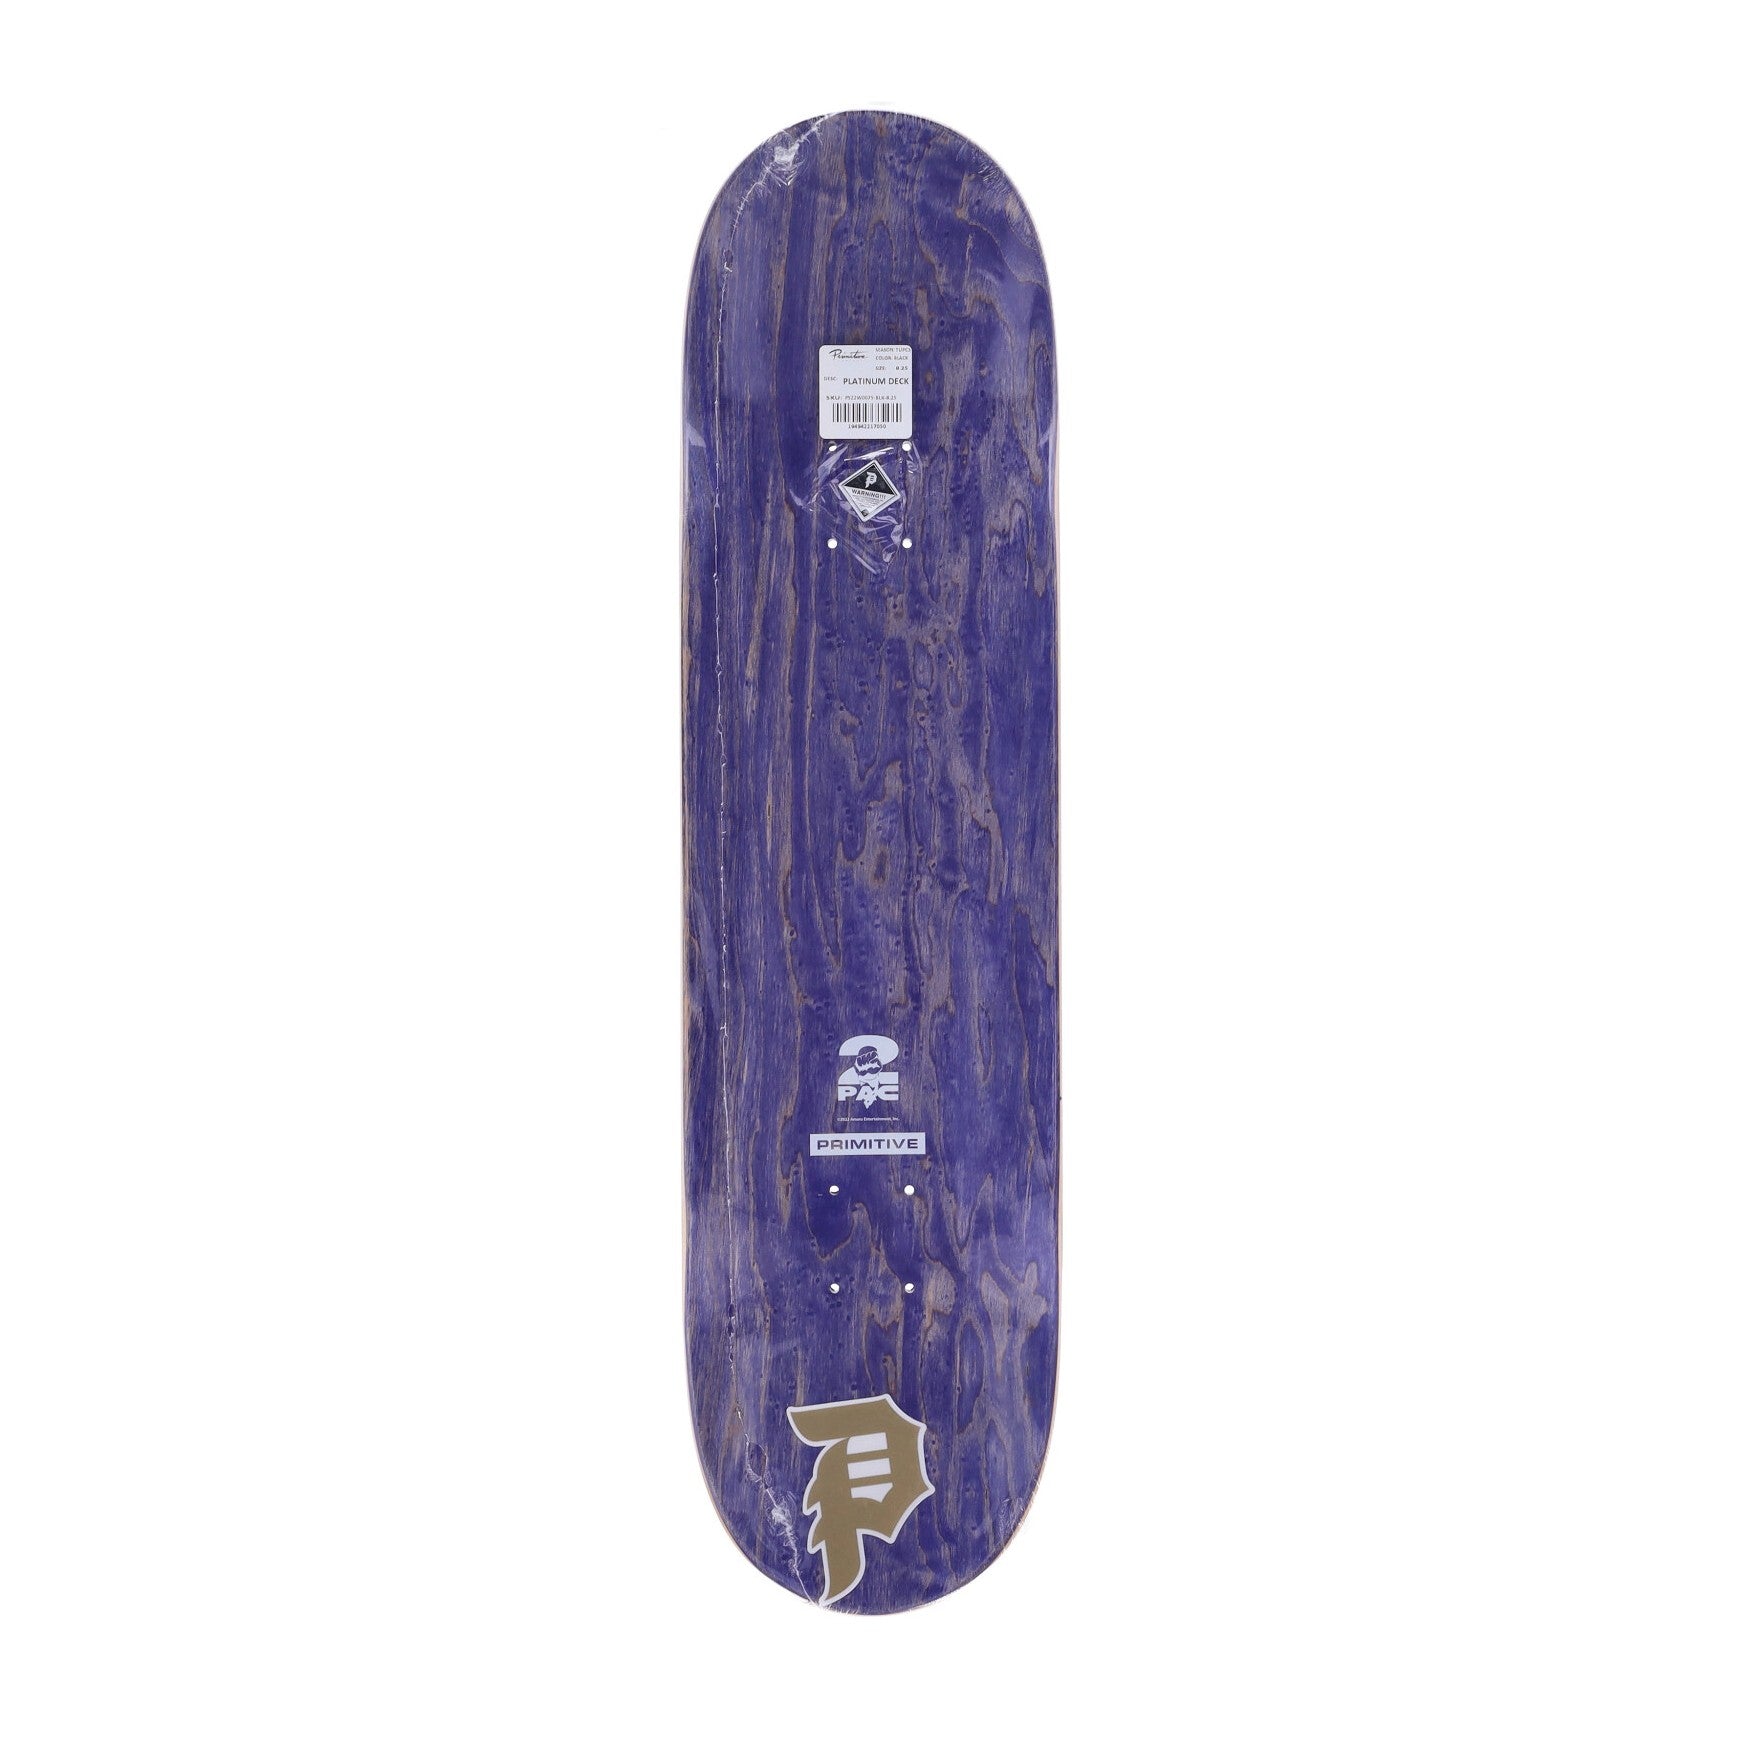 Primitive, Skateboard Tavola Uomo Platinum Deck X 2pac, Royal Blue